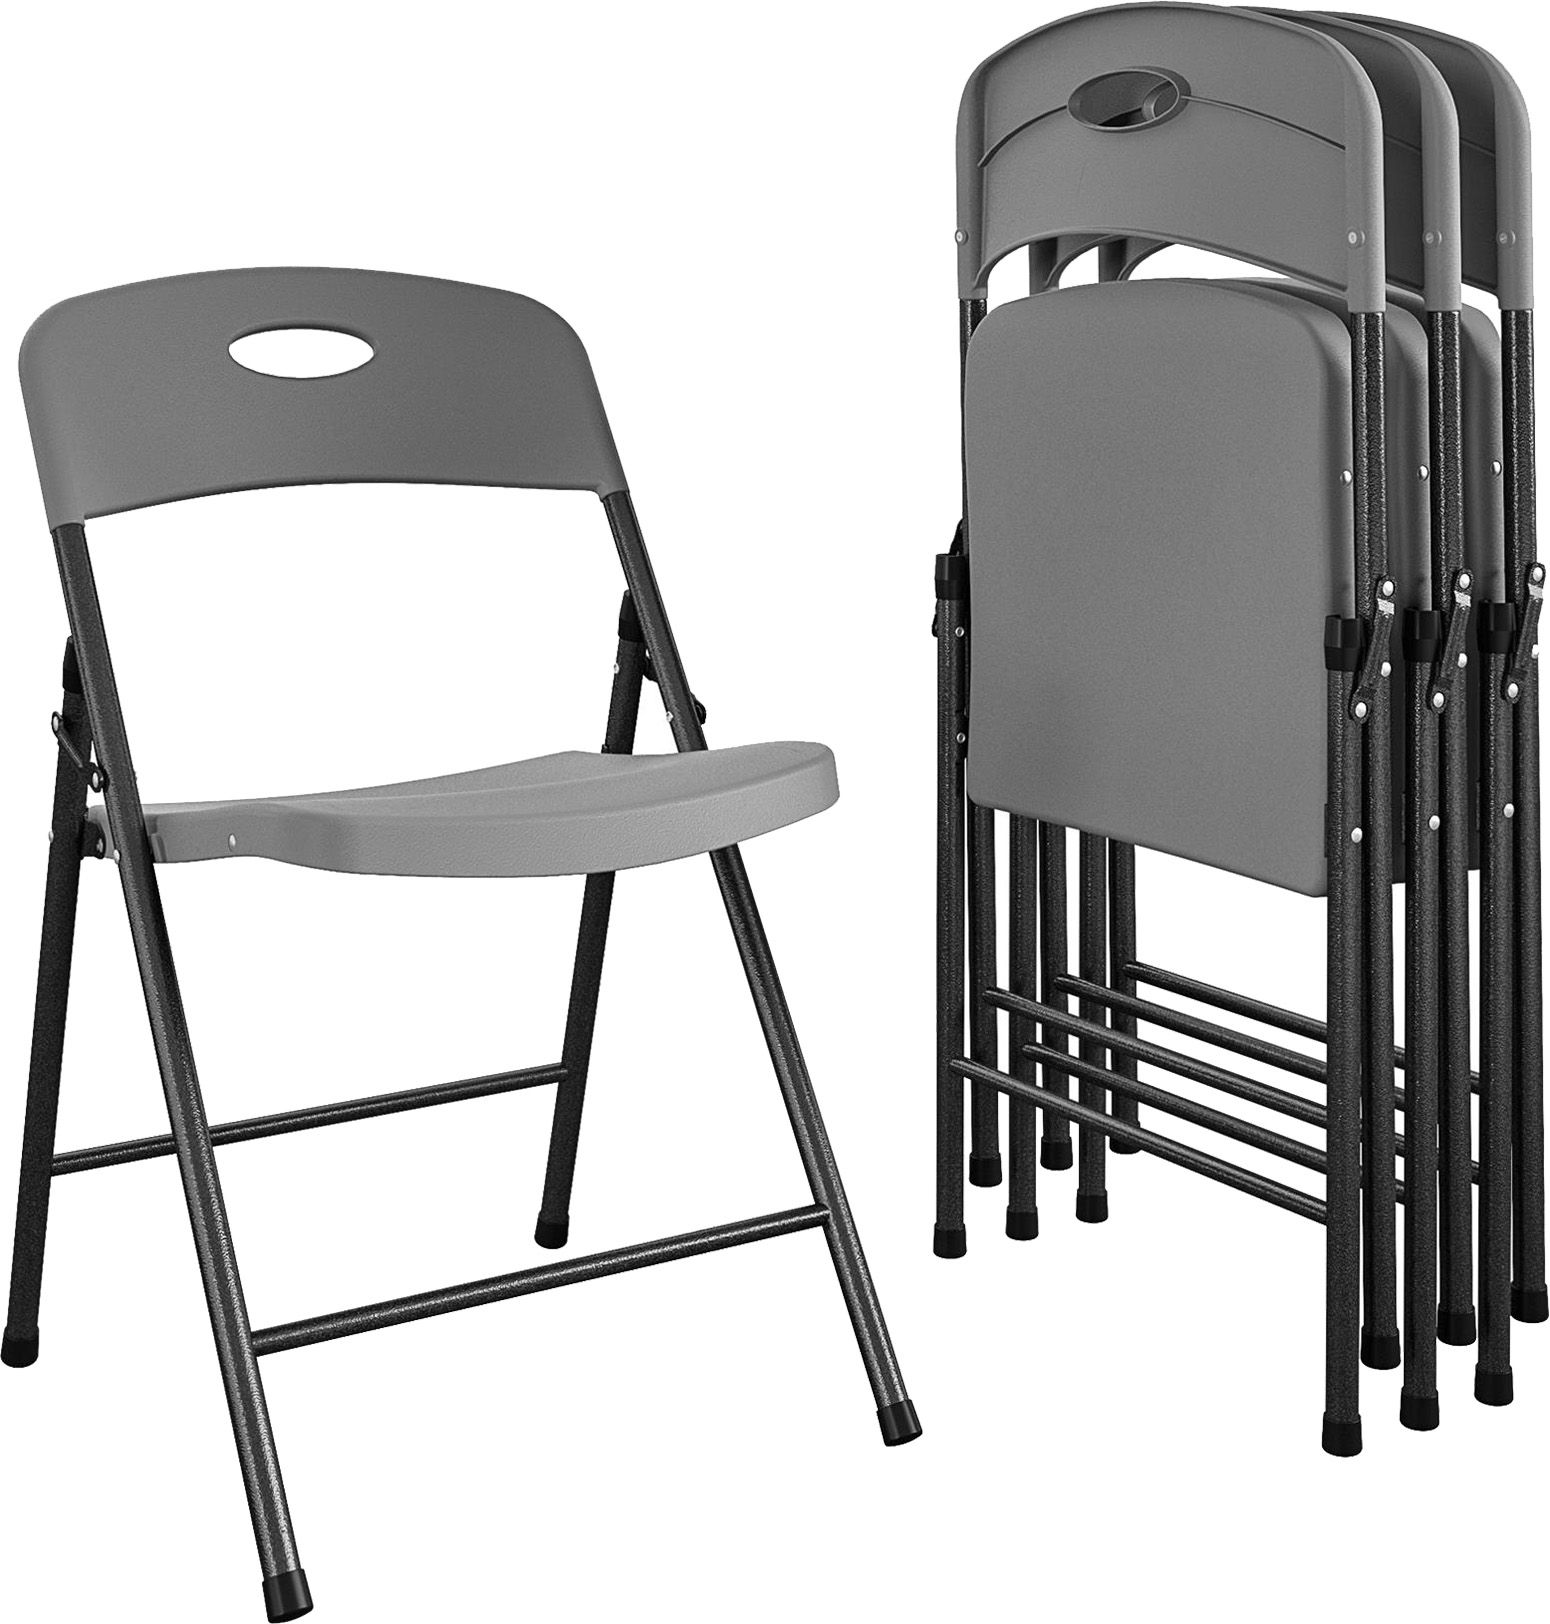 Photos - Chair Cosco Solid Resin Plastic Folding  4-Pack, Gray 23UQWUDBLBRCDFLDNREC 